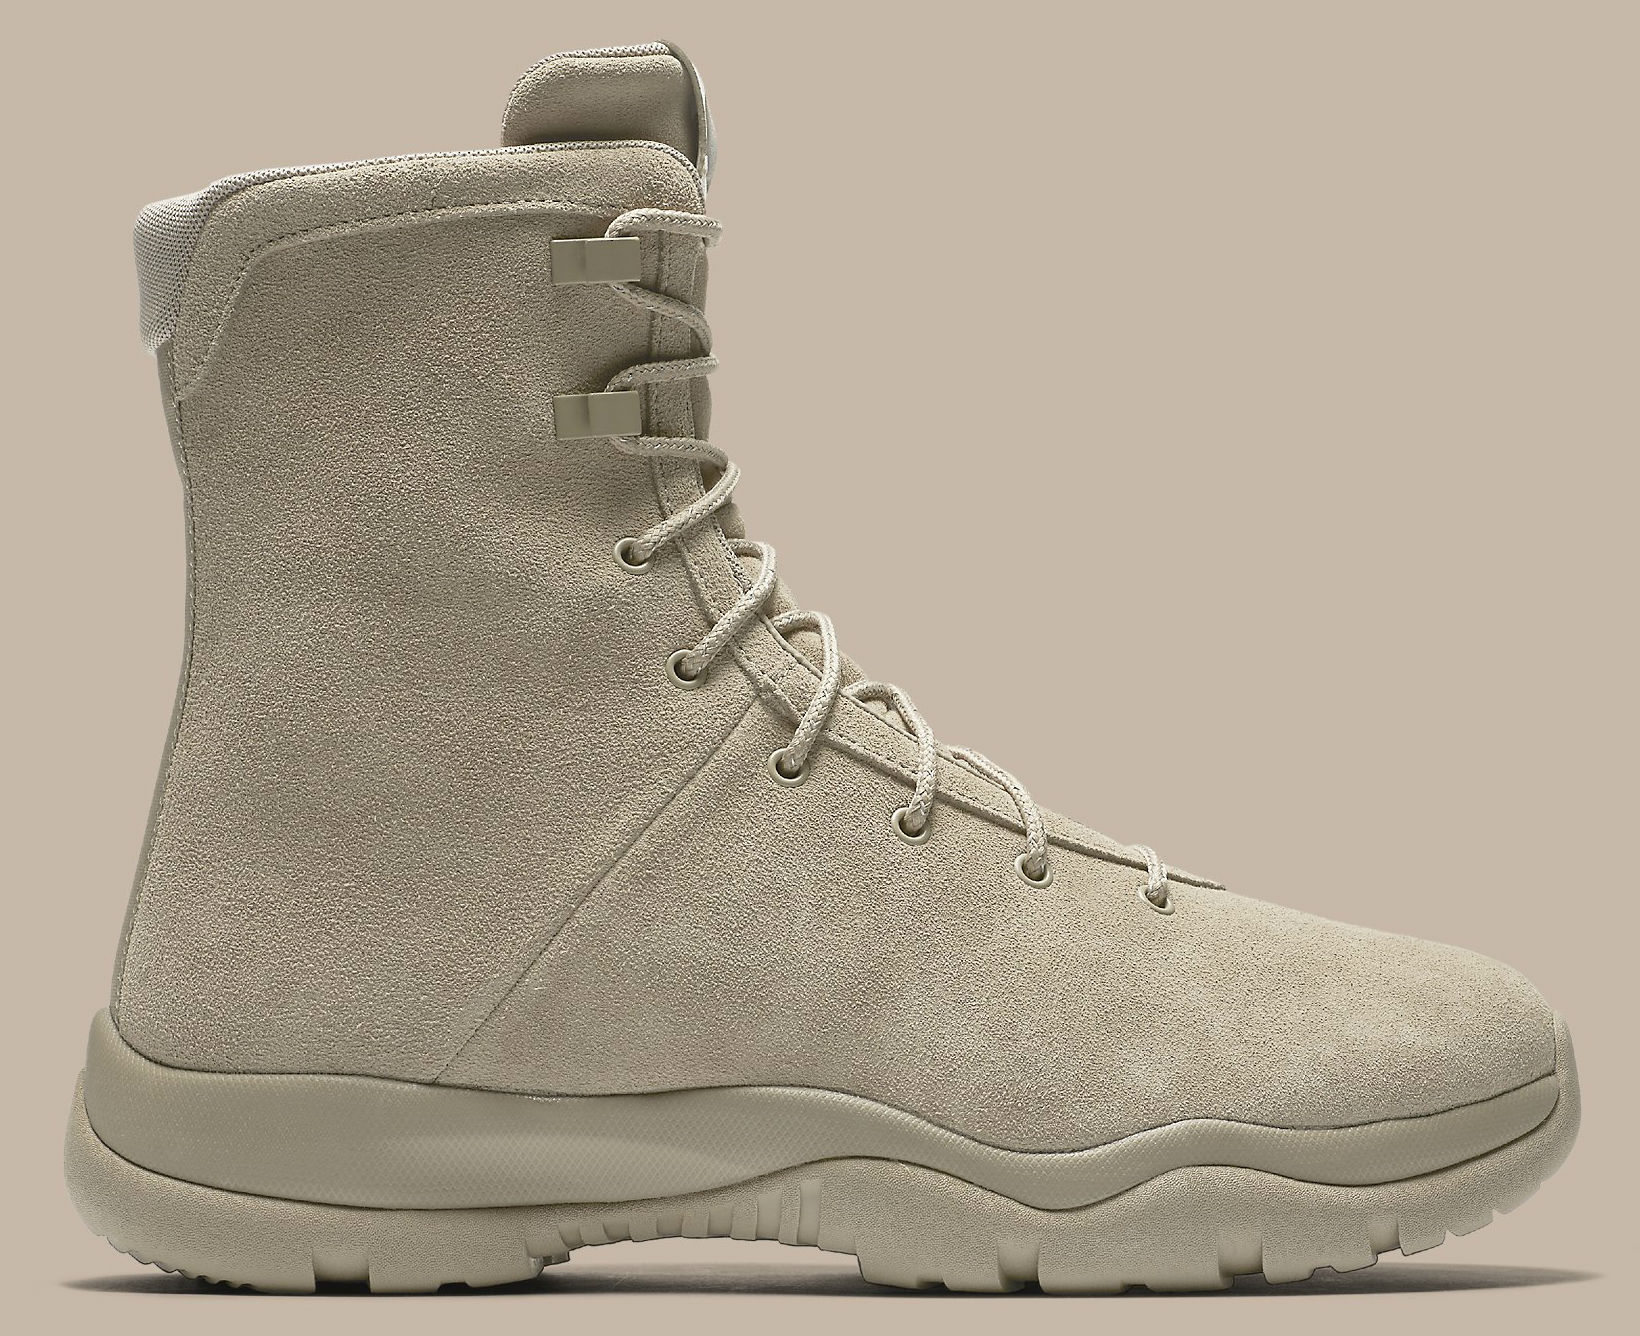 jordan future boots size 13